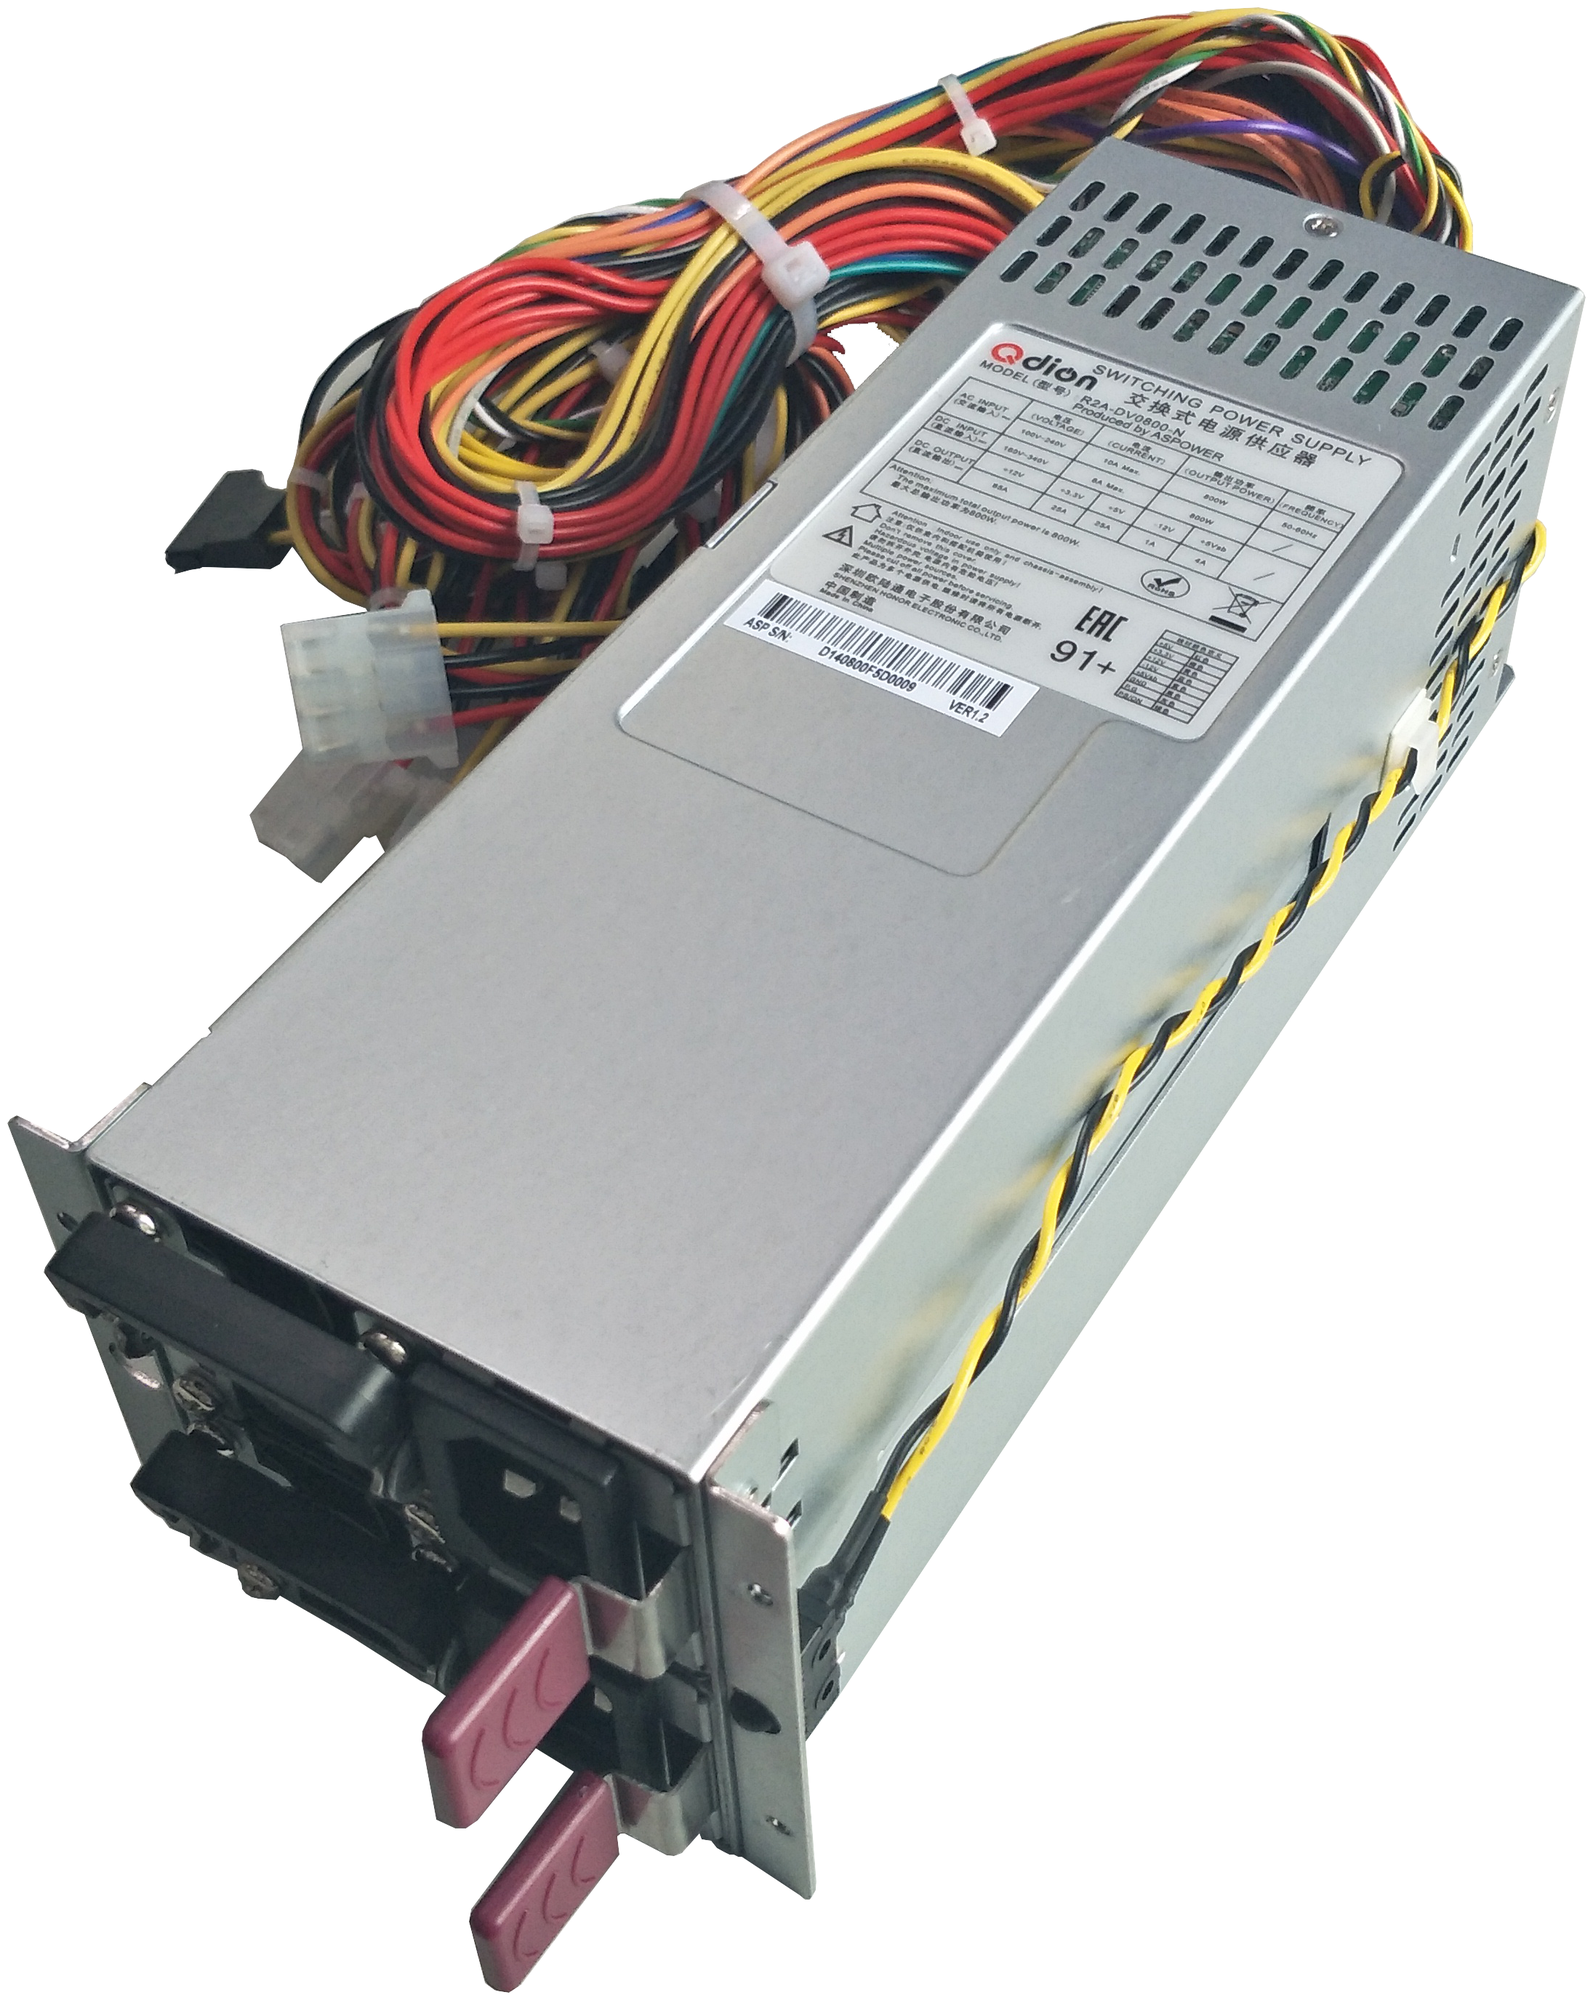 Блок питания Q-dion 800W 2U Reduntant Power Supply